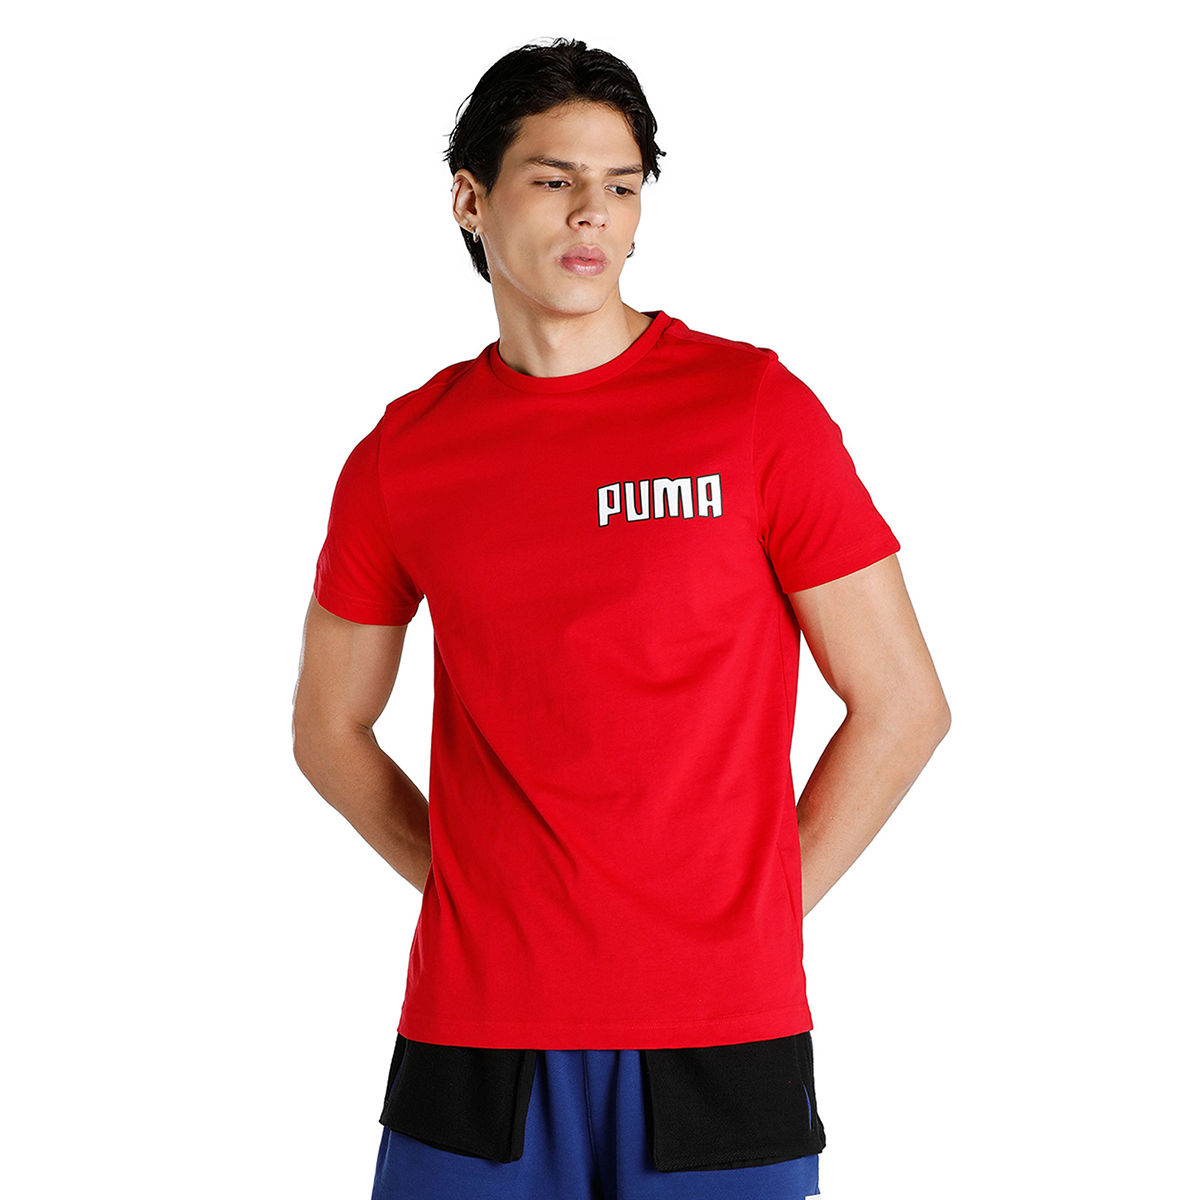 Puma All Net Mens Red T-Shirt (XS)